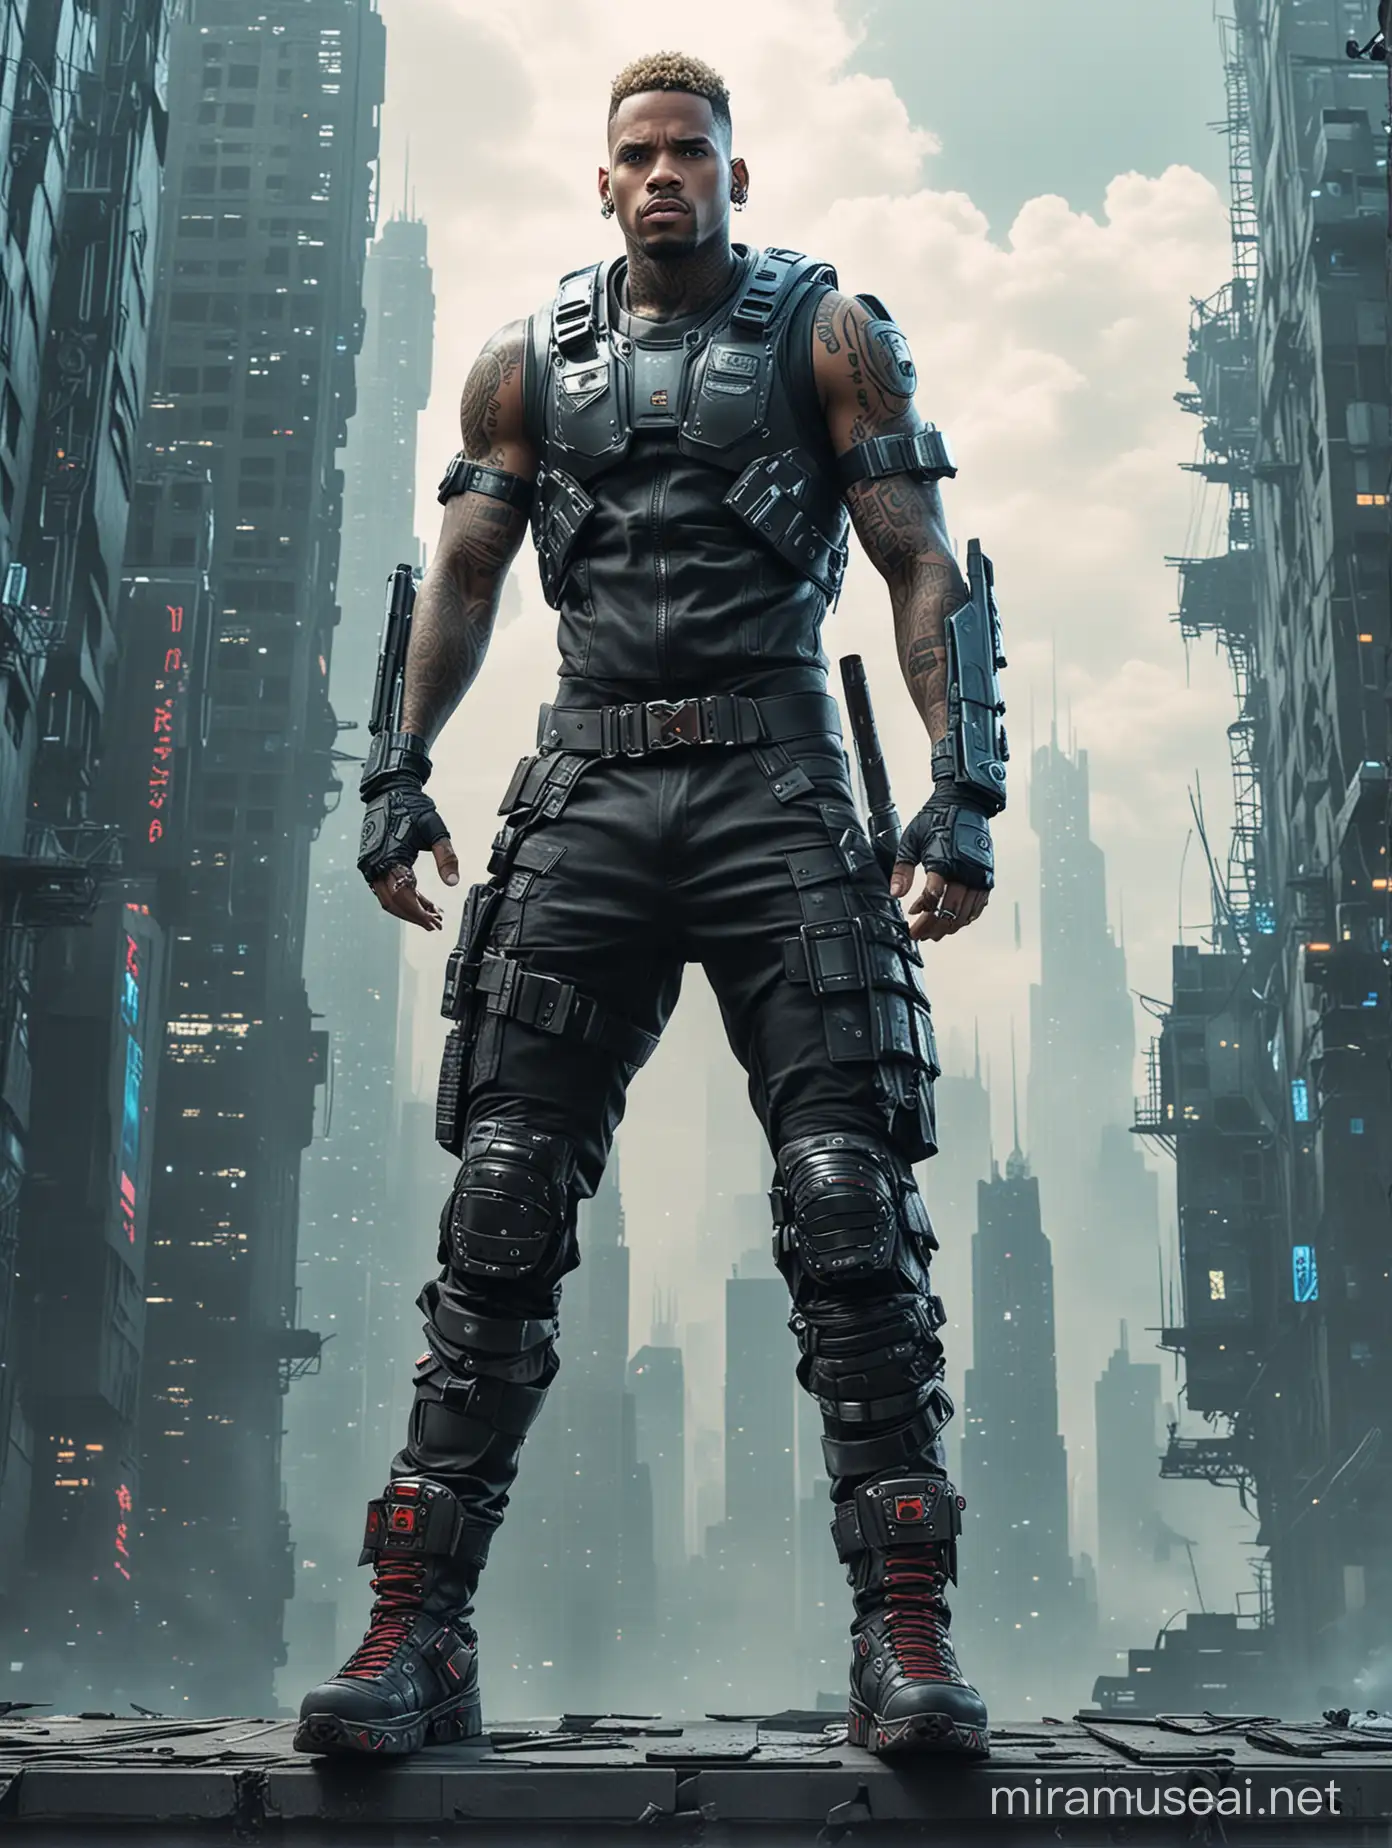 Chris Brown Cyberpunk Warrior Standing on SciFi Skyscraper